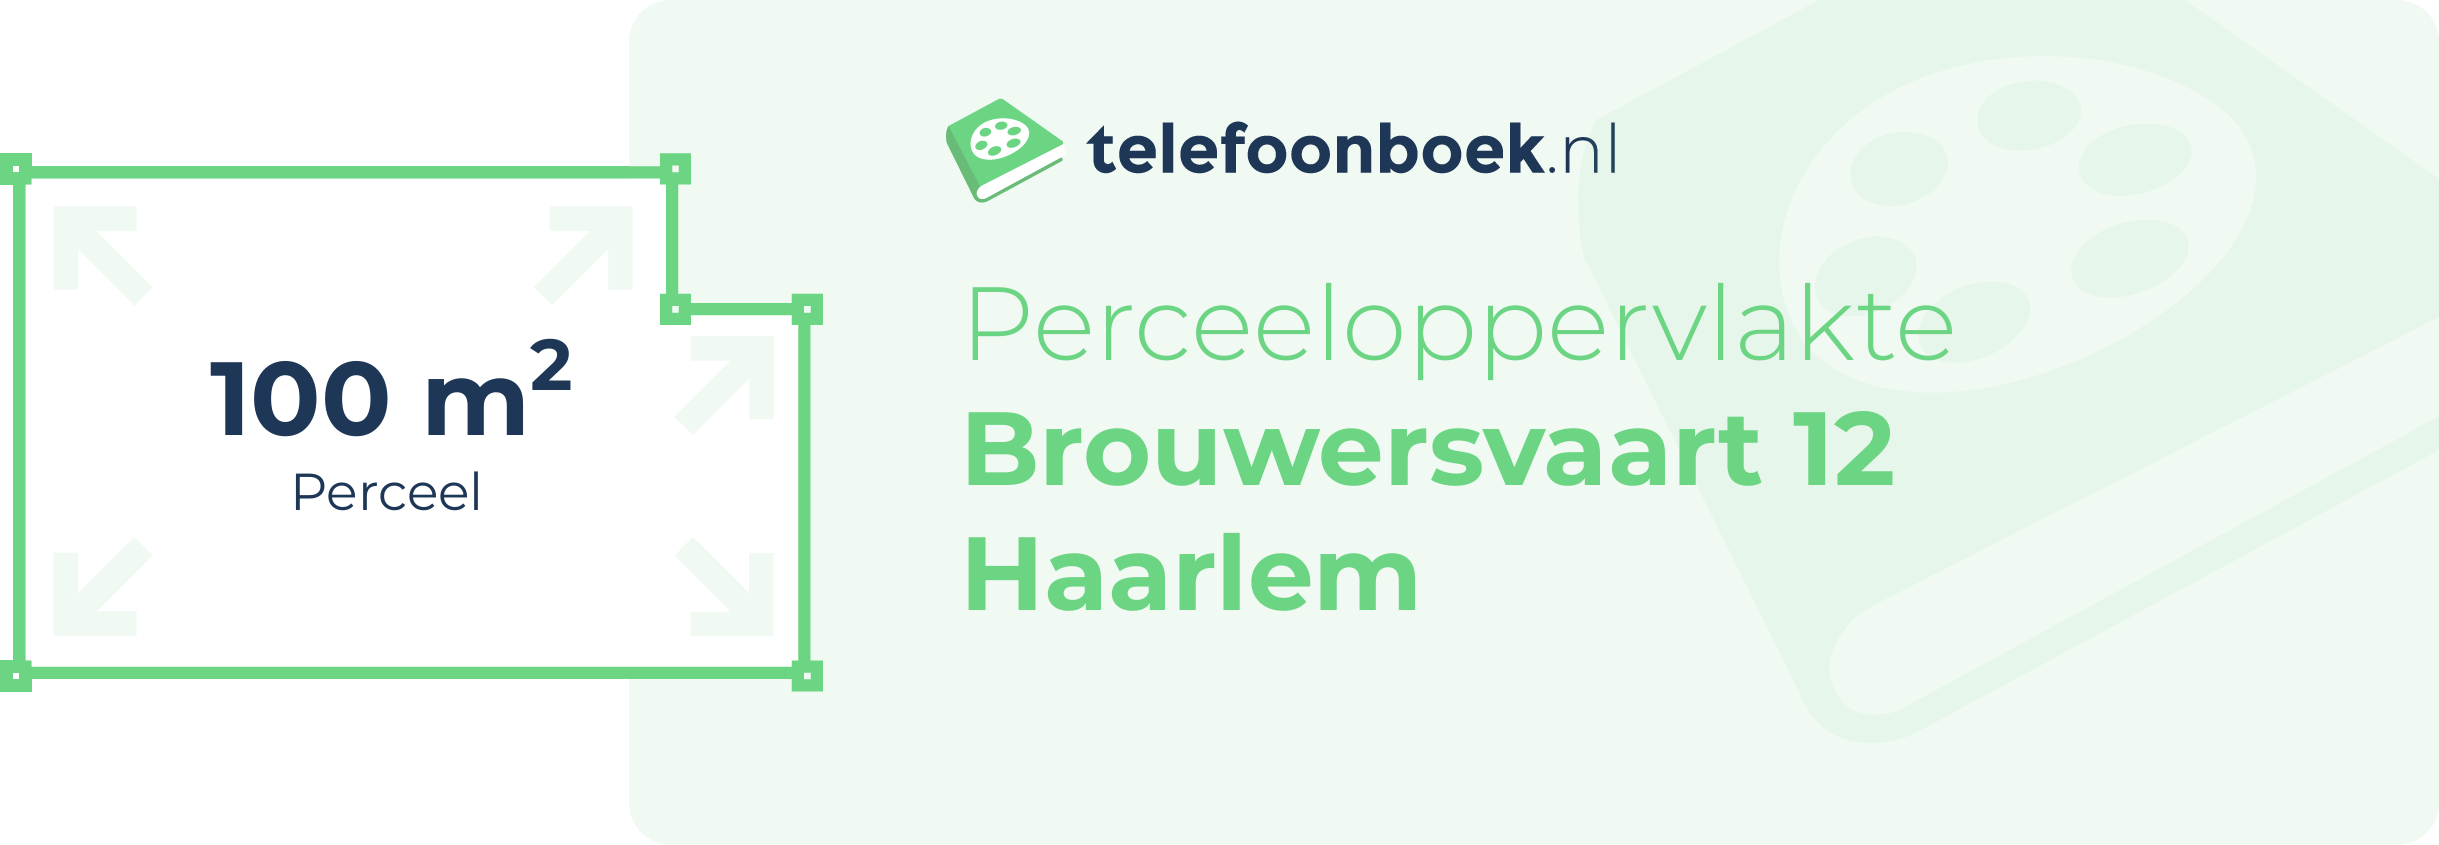 Perceeloppervlakte Brouwersvaart 12 Haarlem